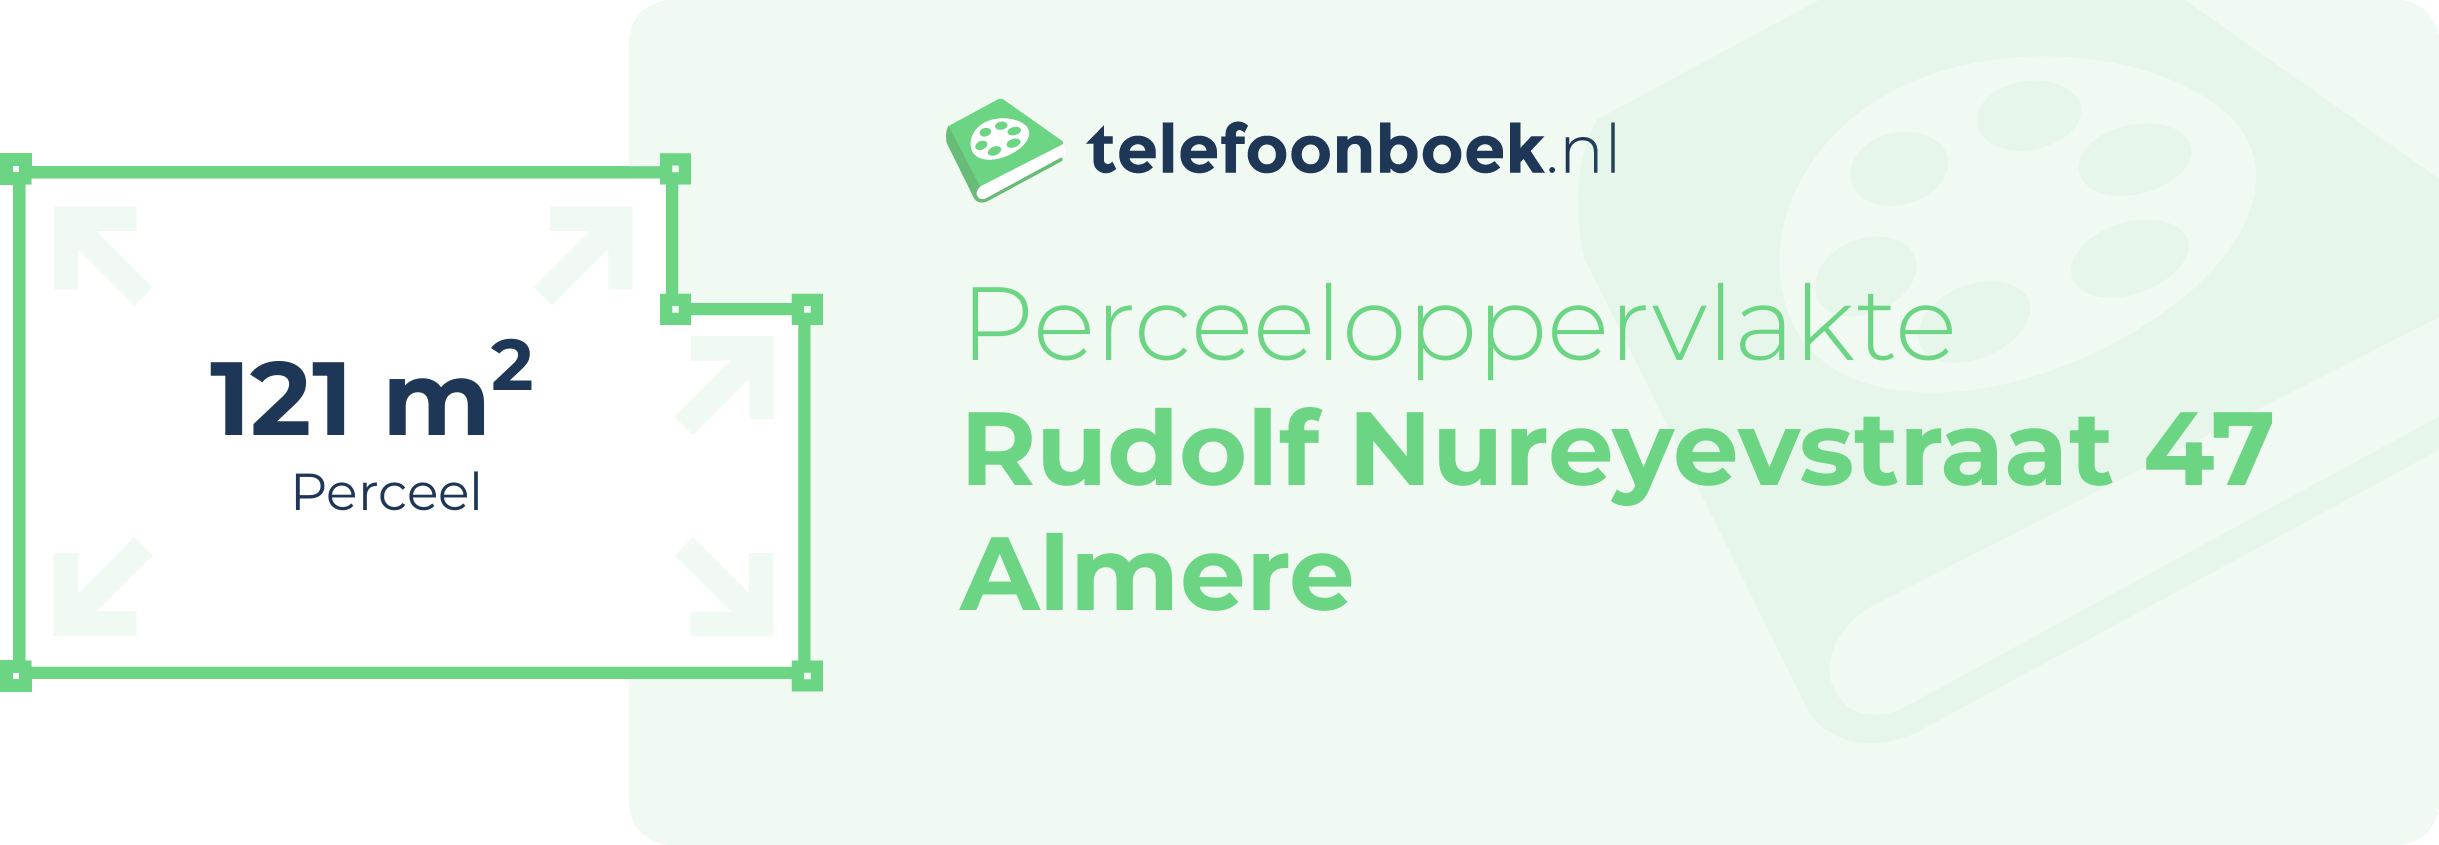 Perceeloppervlakte Rudolf Nureyevstraat 47 Almere